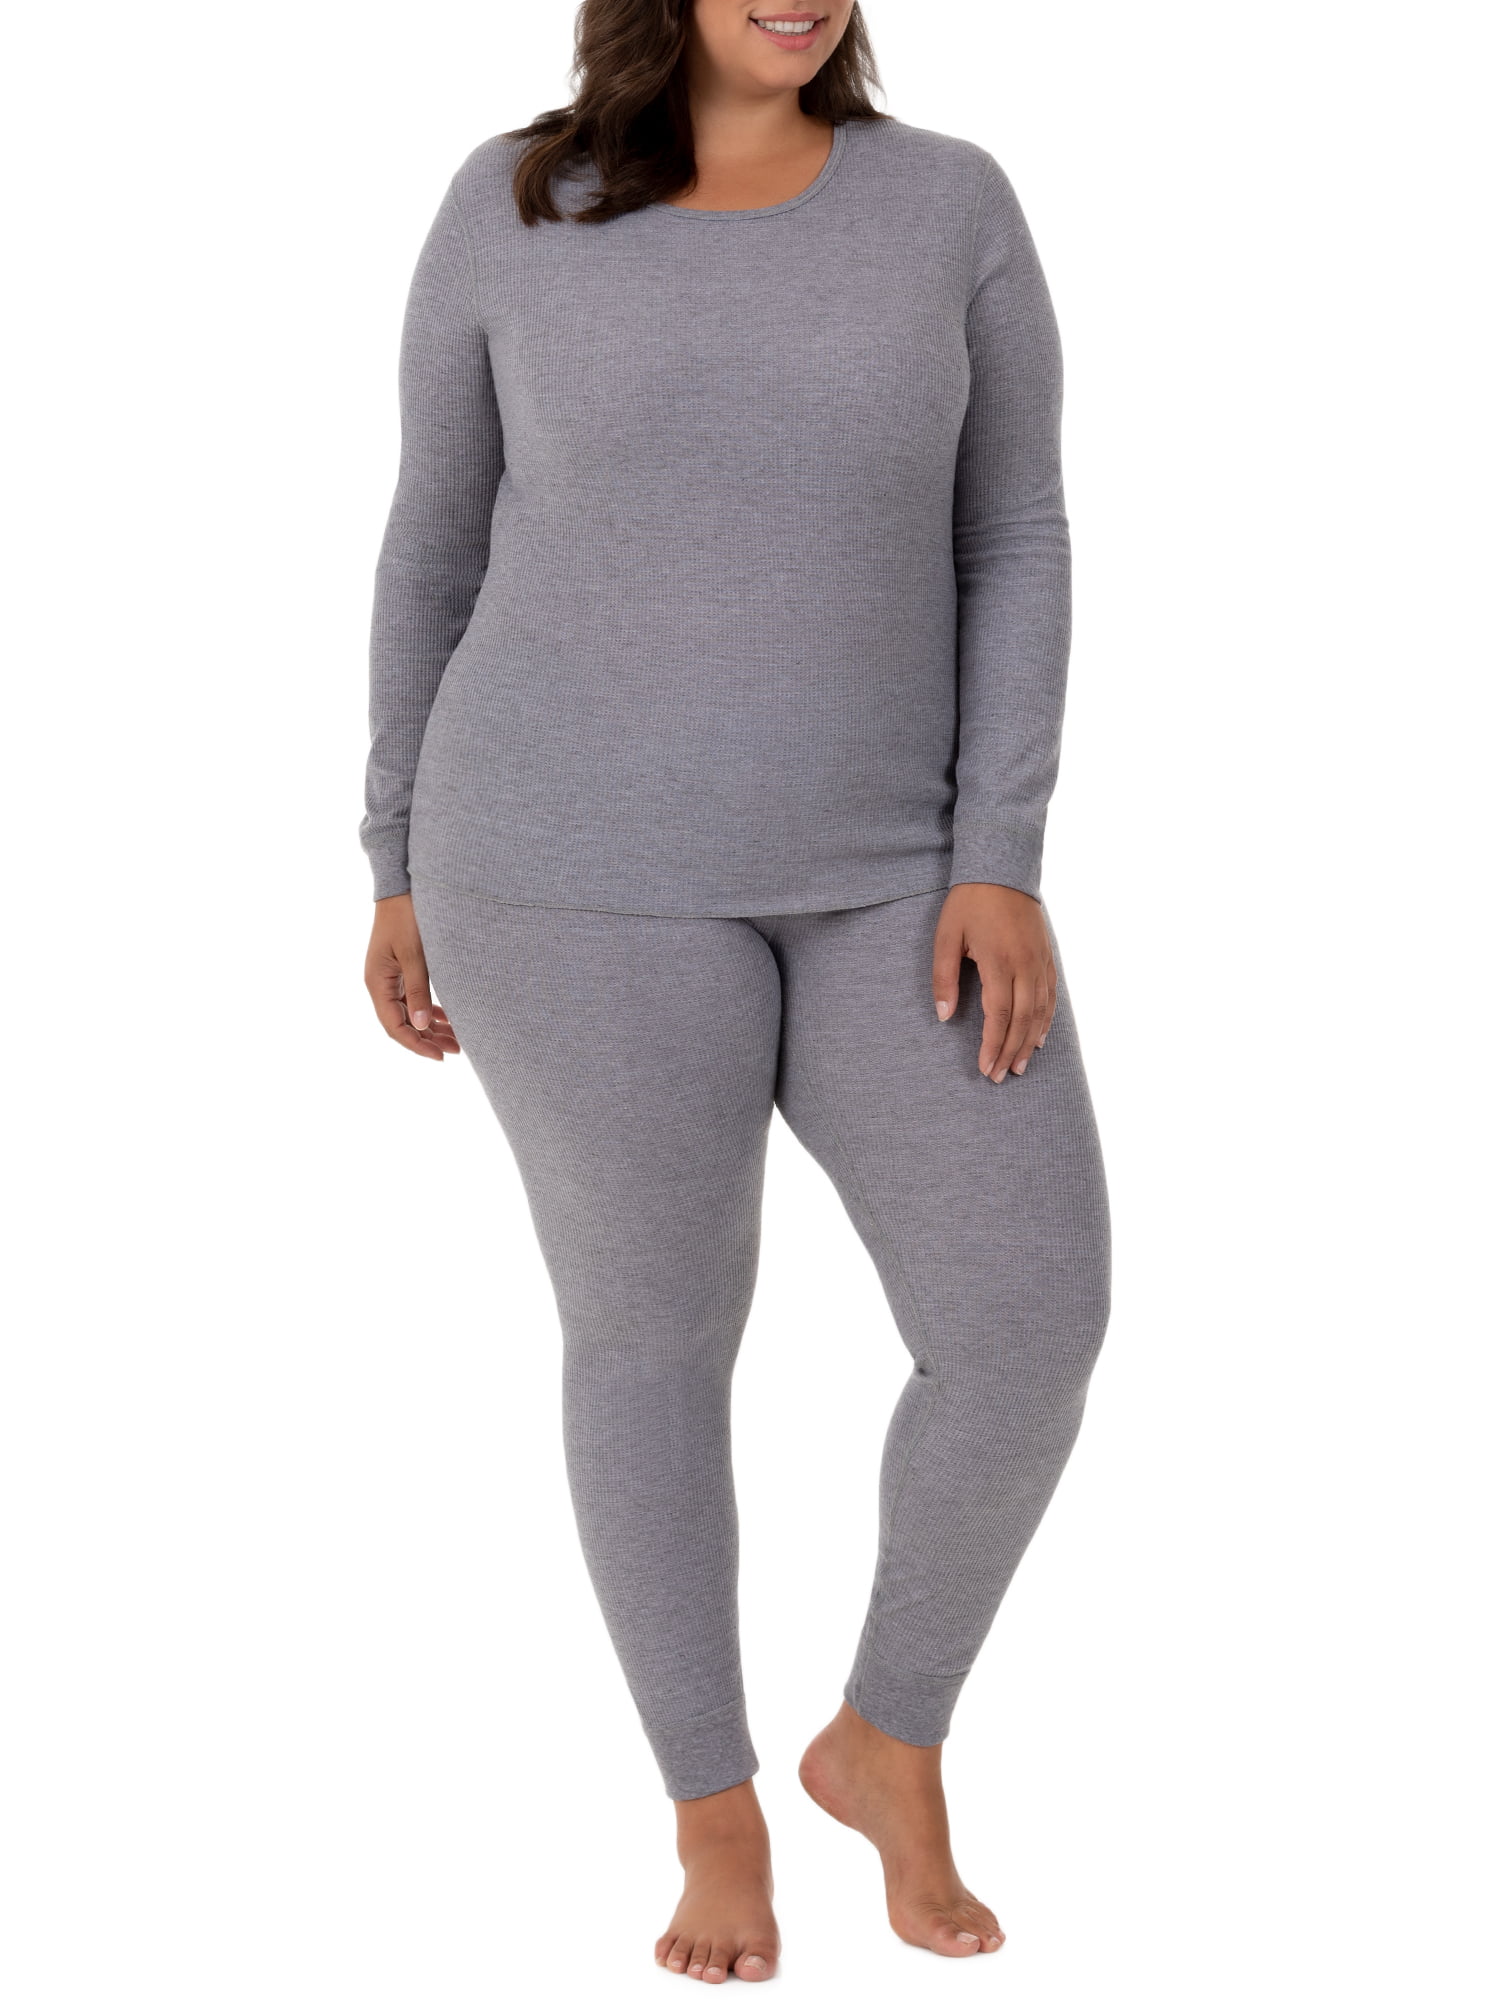 Afskrække Indica tendens Women's Plus Size Waffle Thermal Underwear Top and Pant Set - Walmart.com